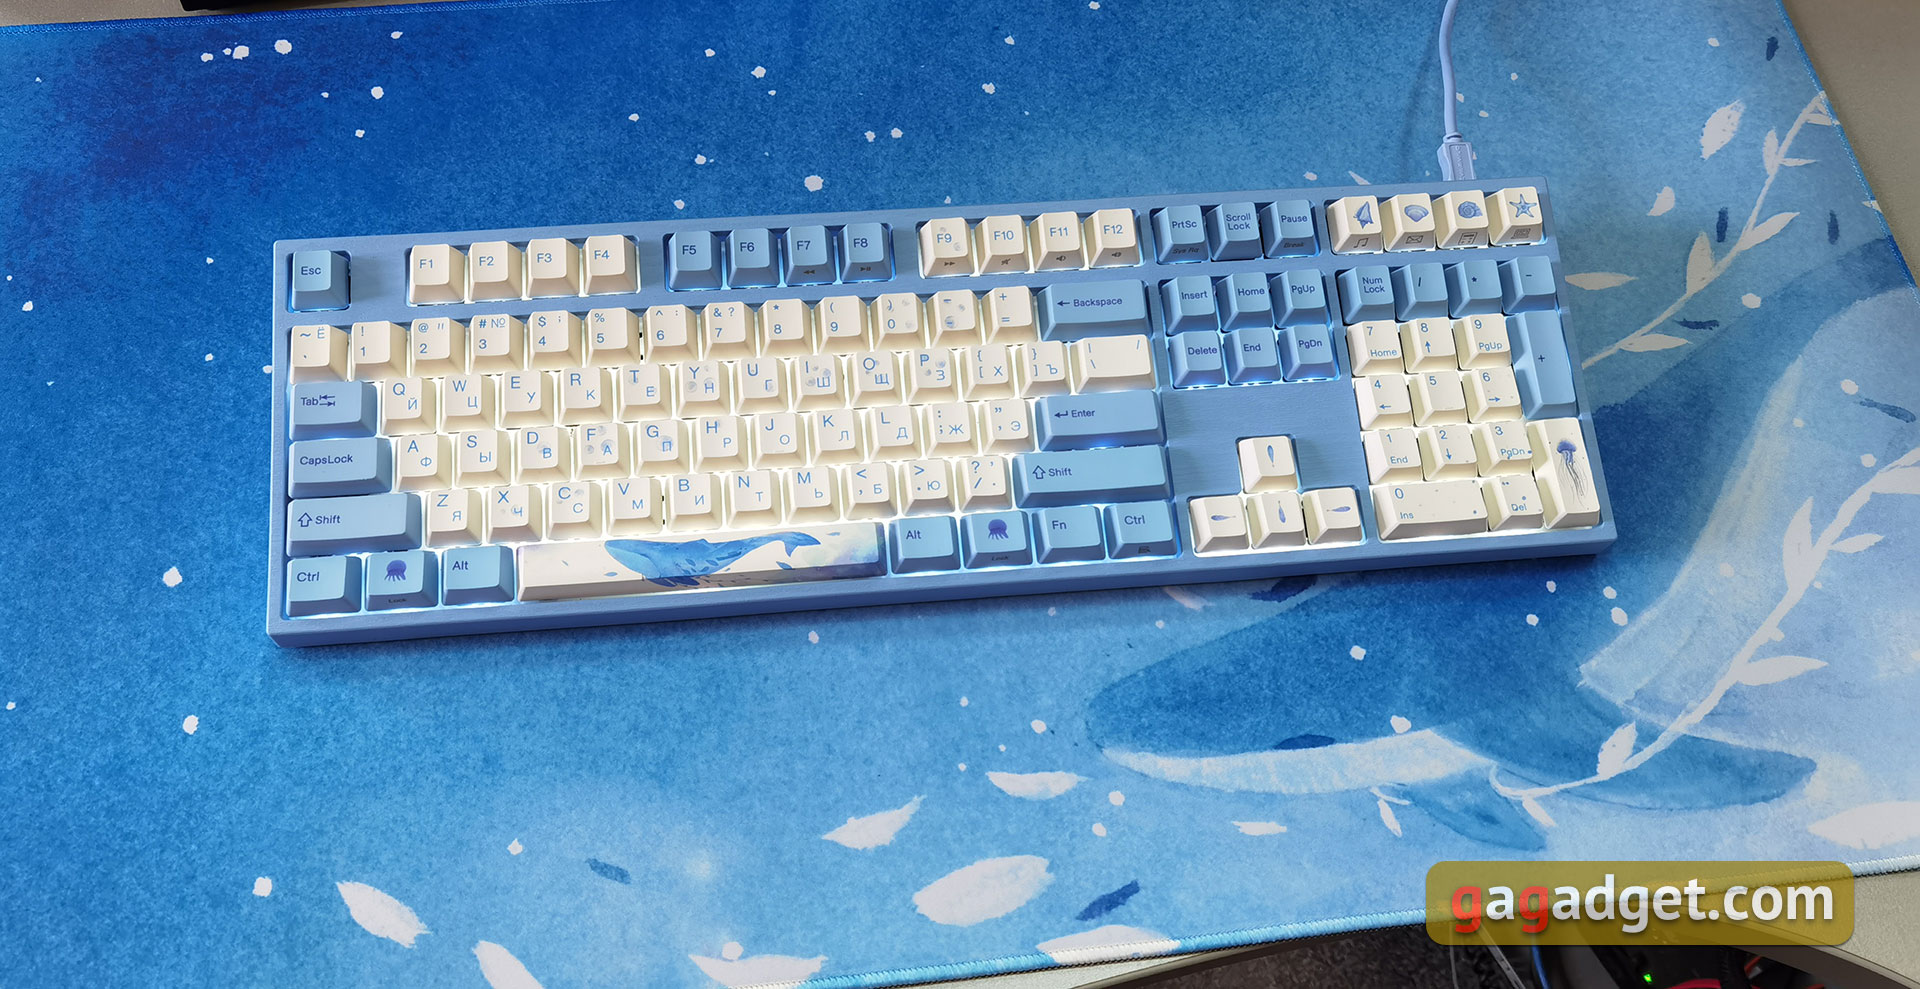 Varmilo VA108M Sea Melody review: a Hi-End mechanical keyboard-28